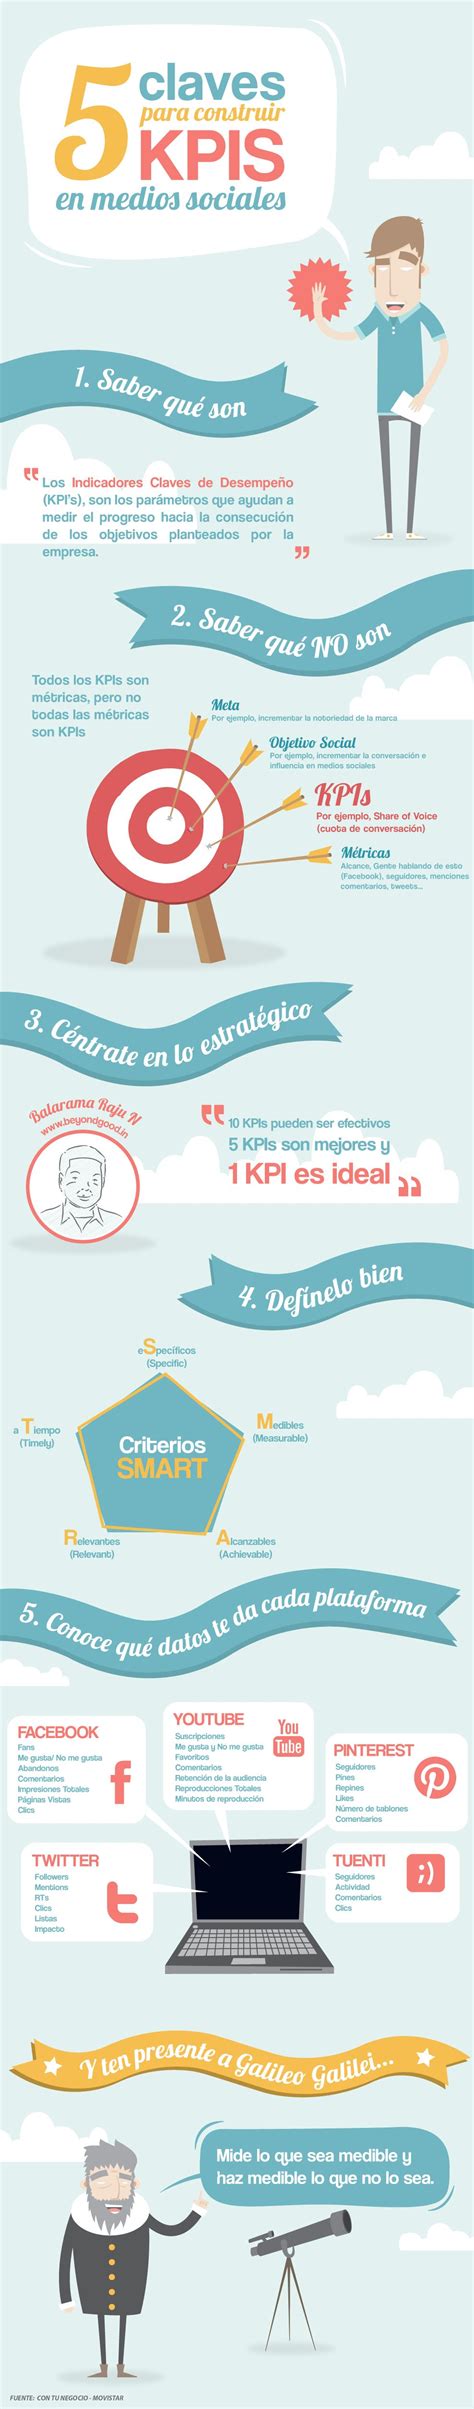 Los Principales Kpi En Redes Sociales Infografia Infographic Images